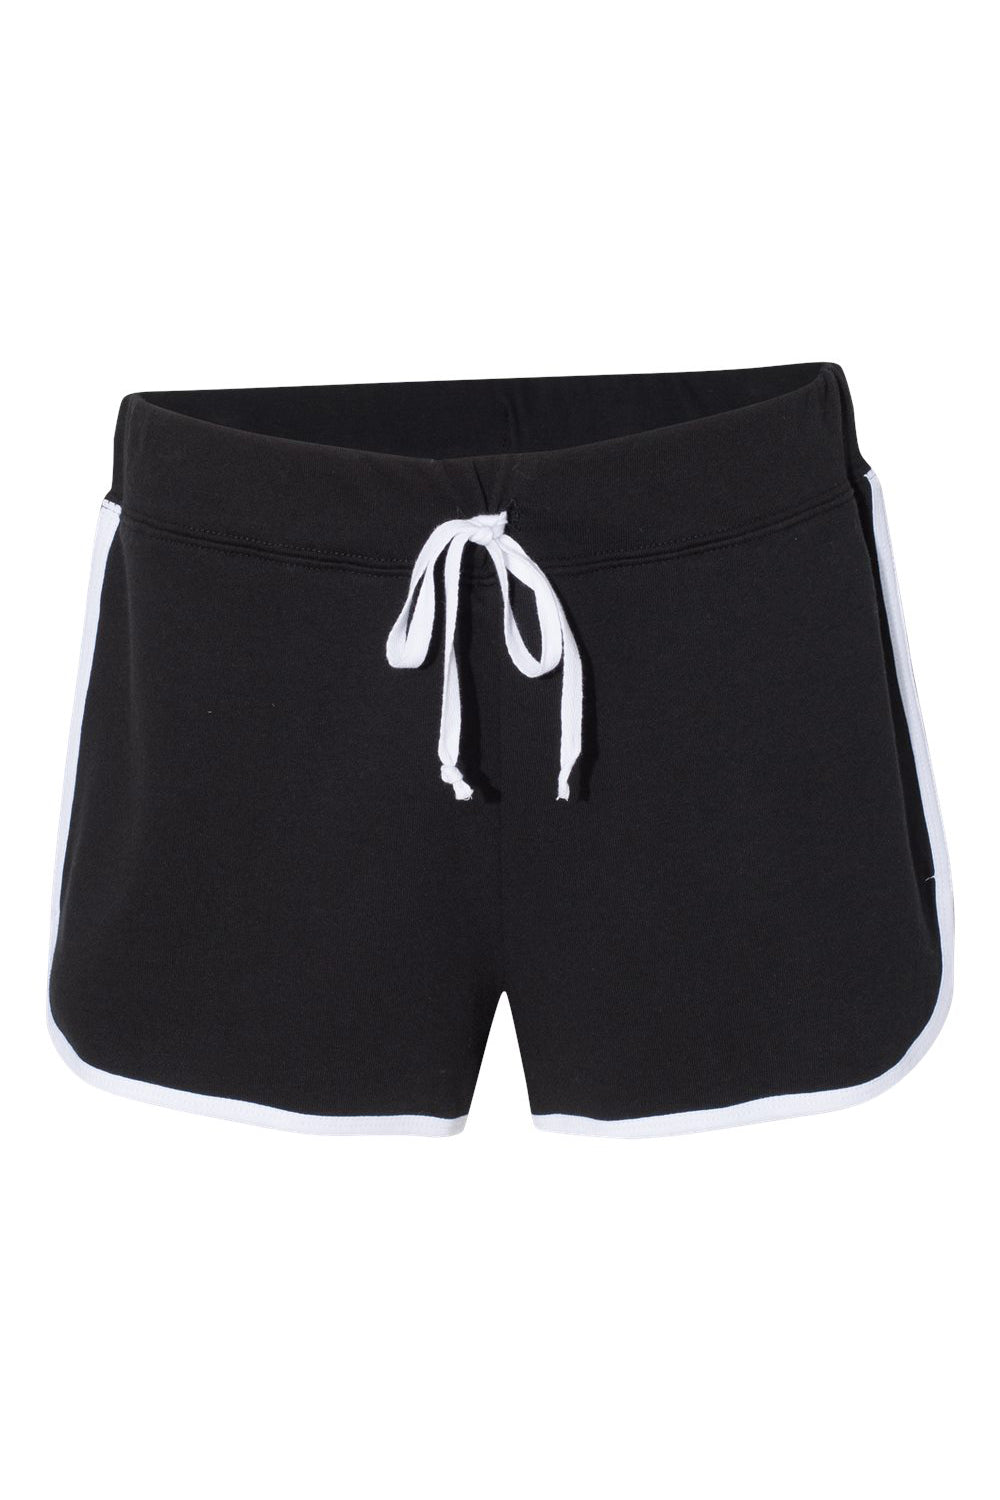 Boxercraft R65 Womens Relay Athletic Shorts Black/White Flat Front